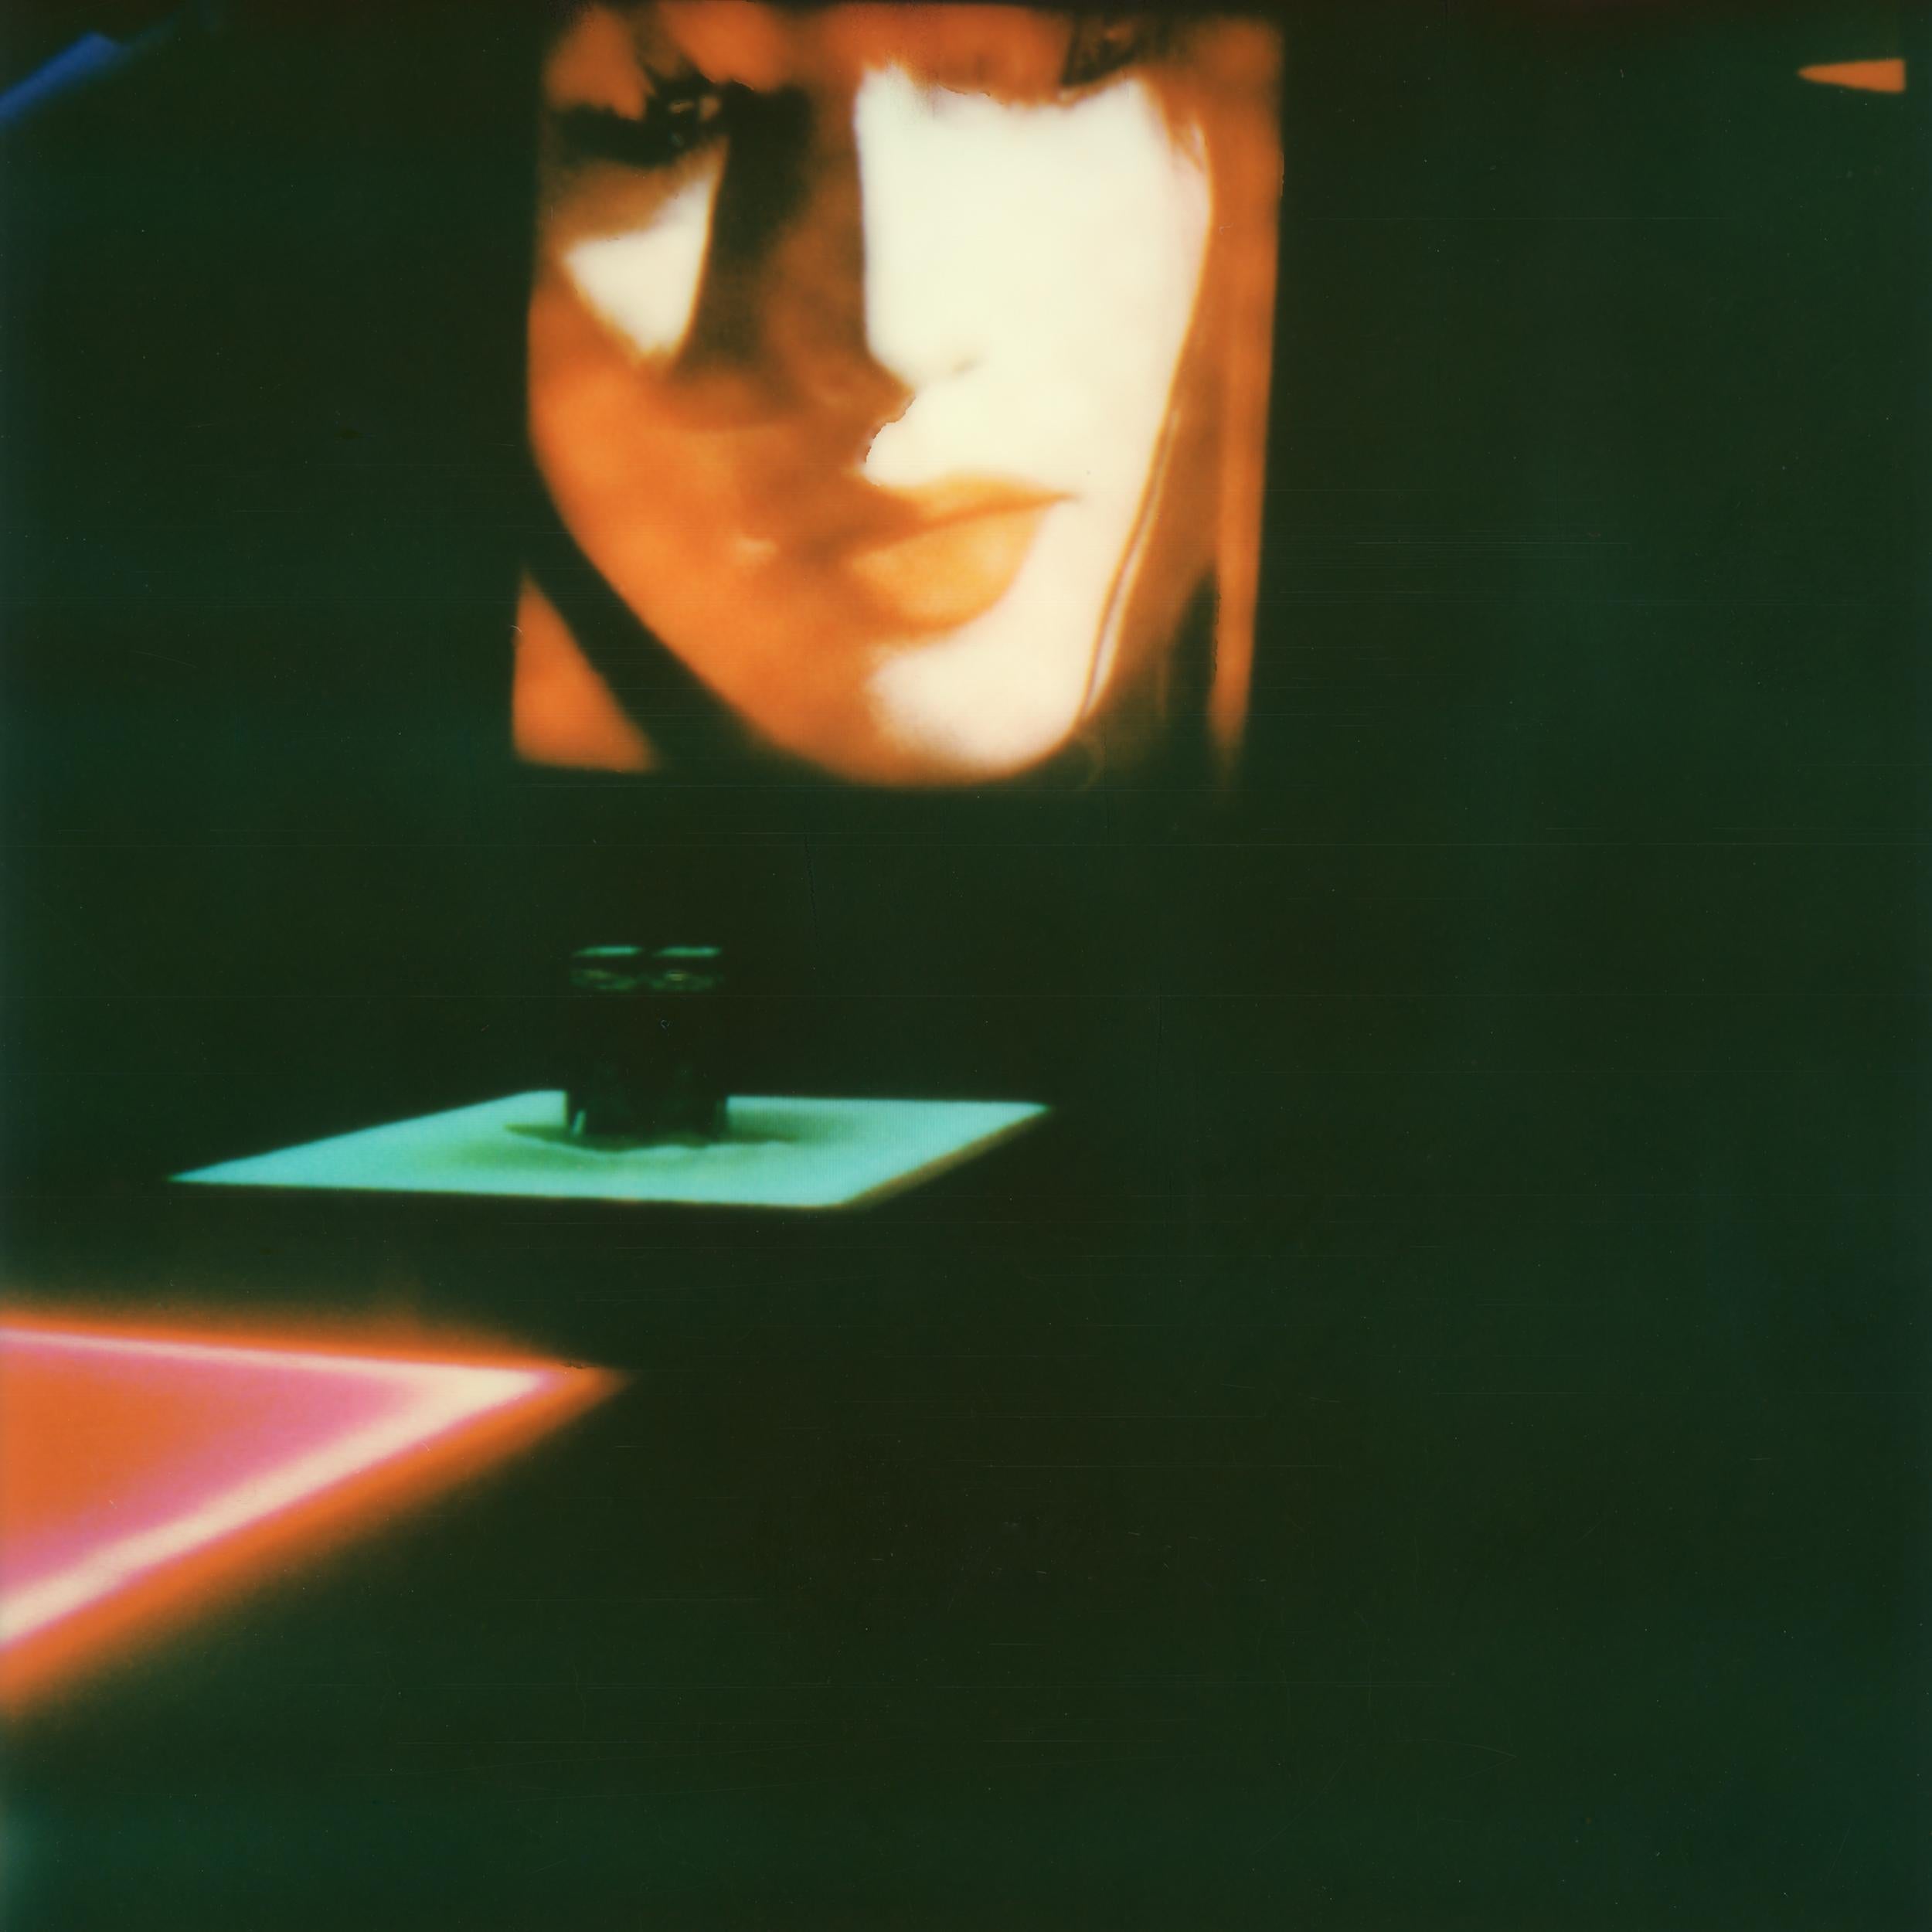 Neon Demon - Contemporary, Polaroid, Woman, 21st Century, Psychiatry